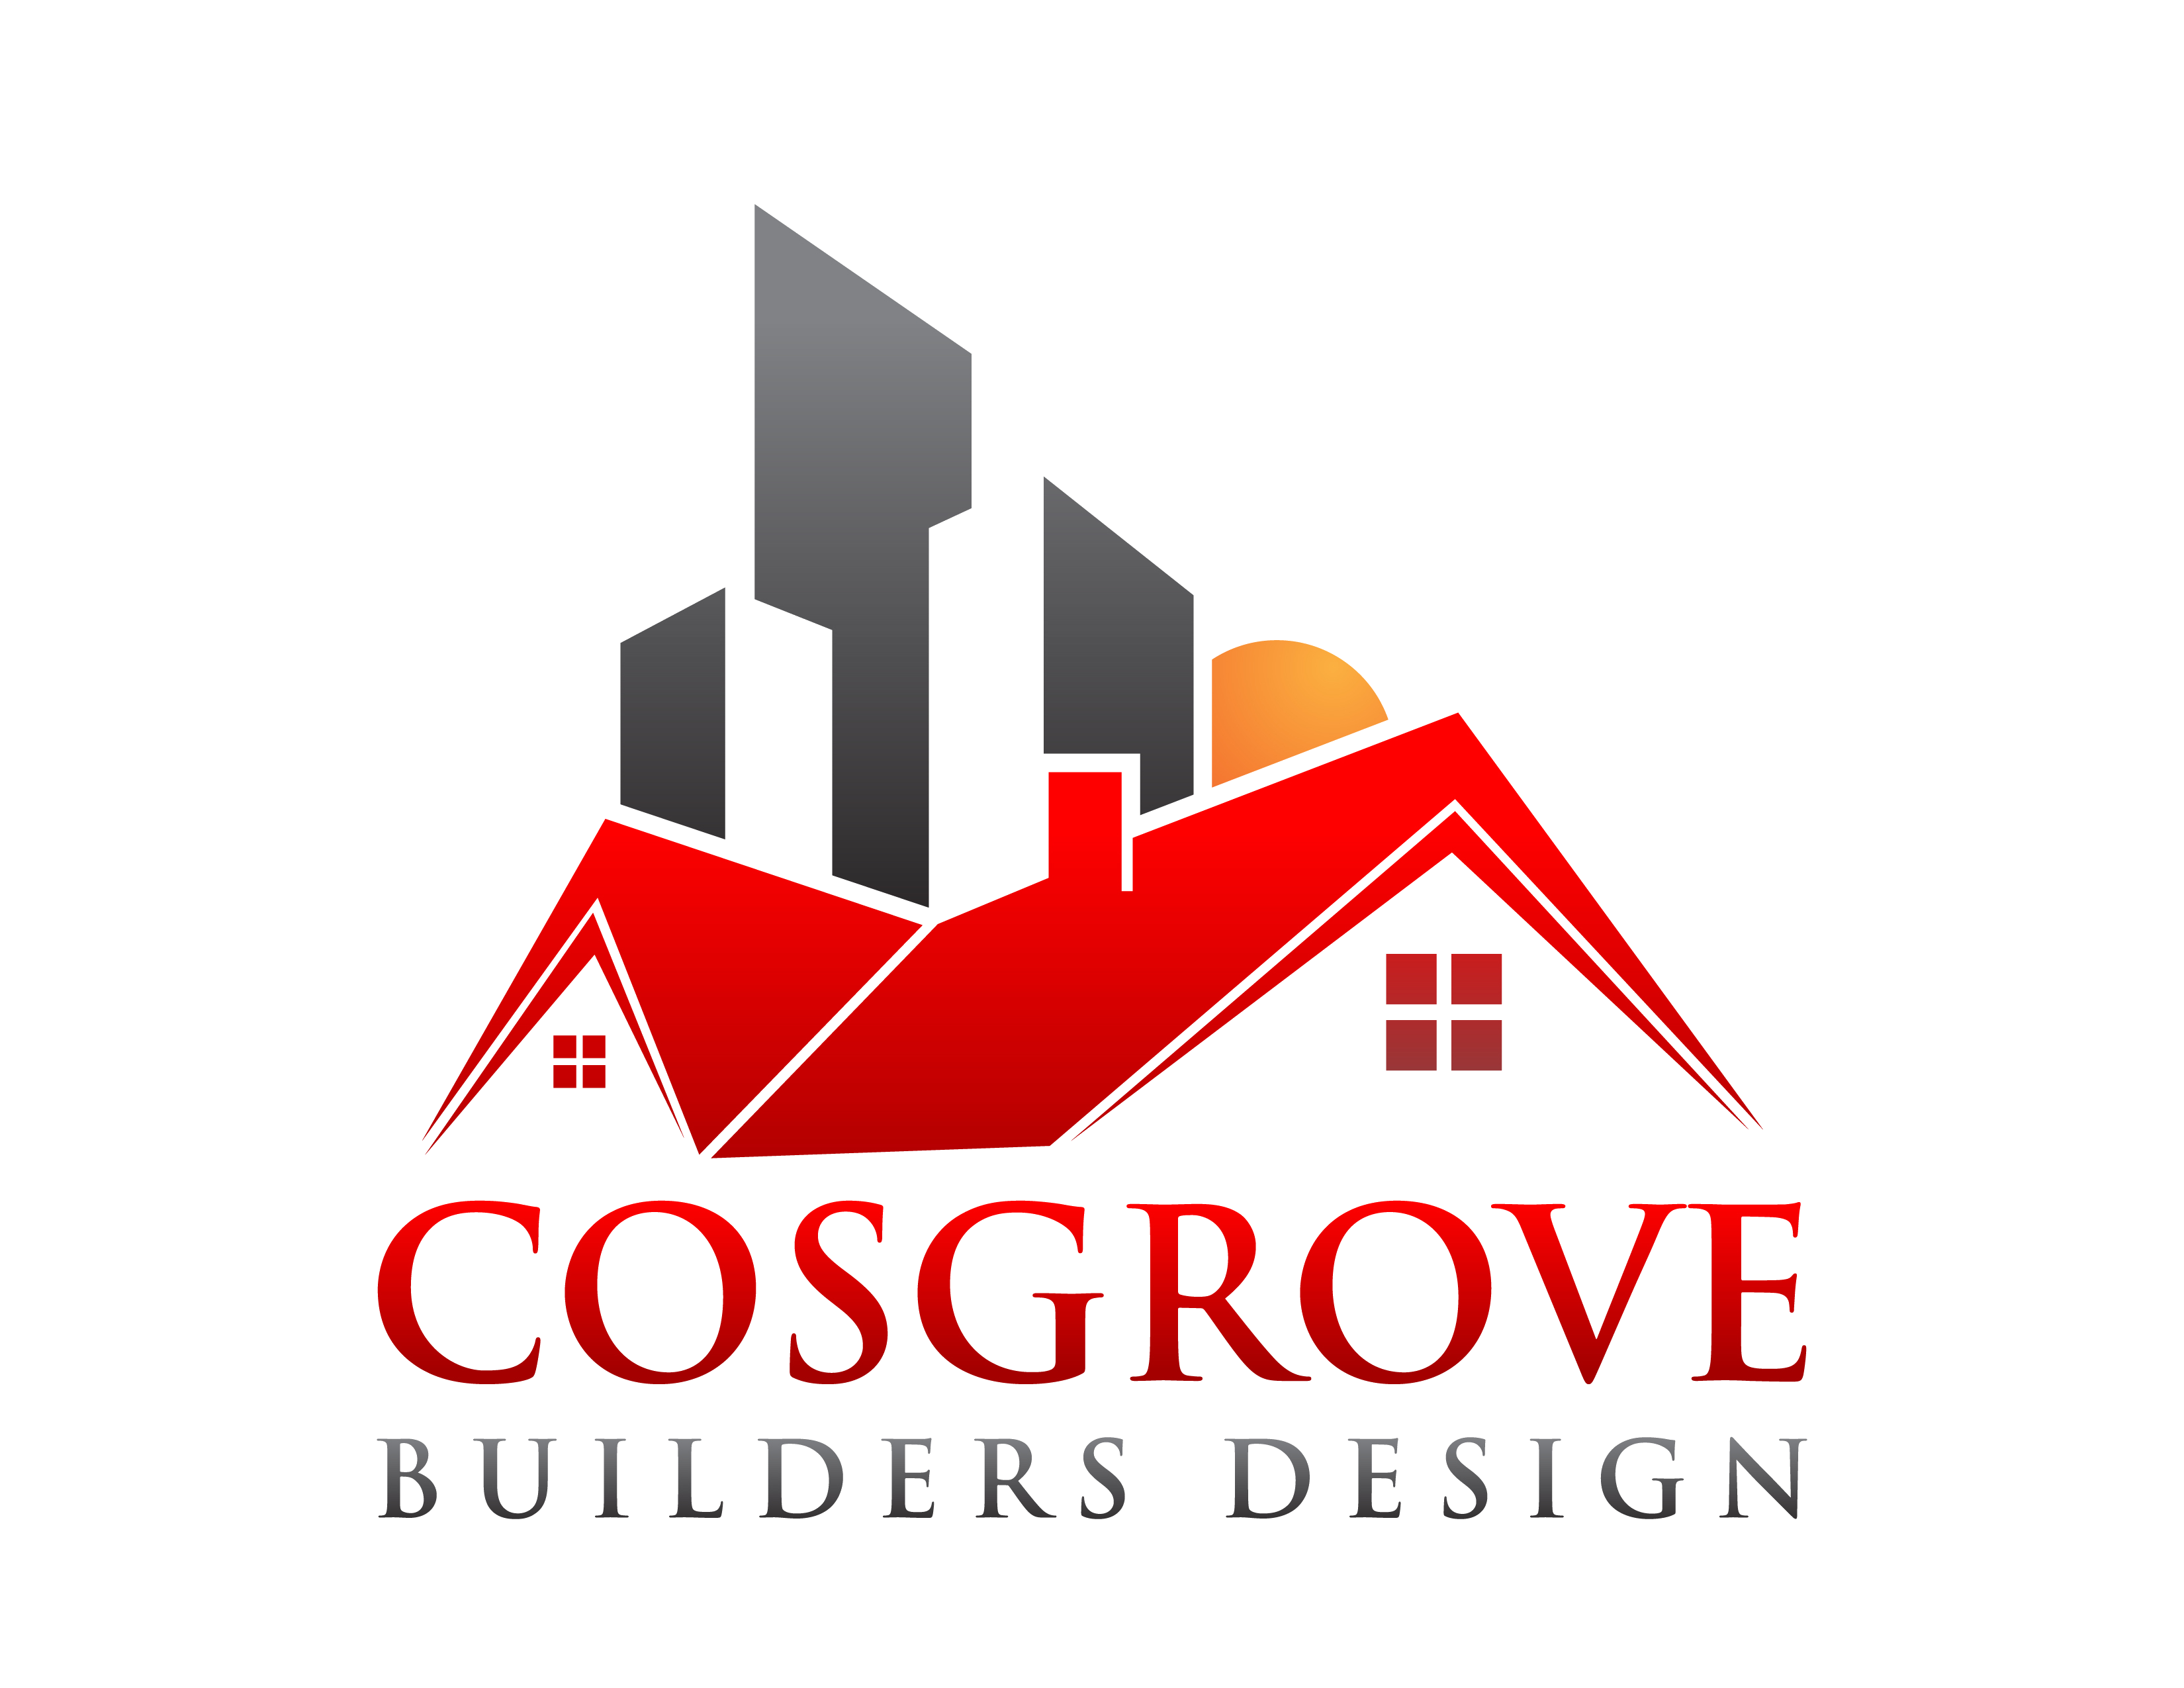 Cosgrove Builders Design - Ron Cosgrove